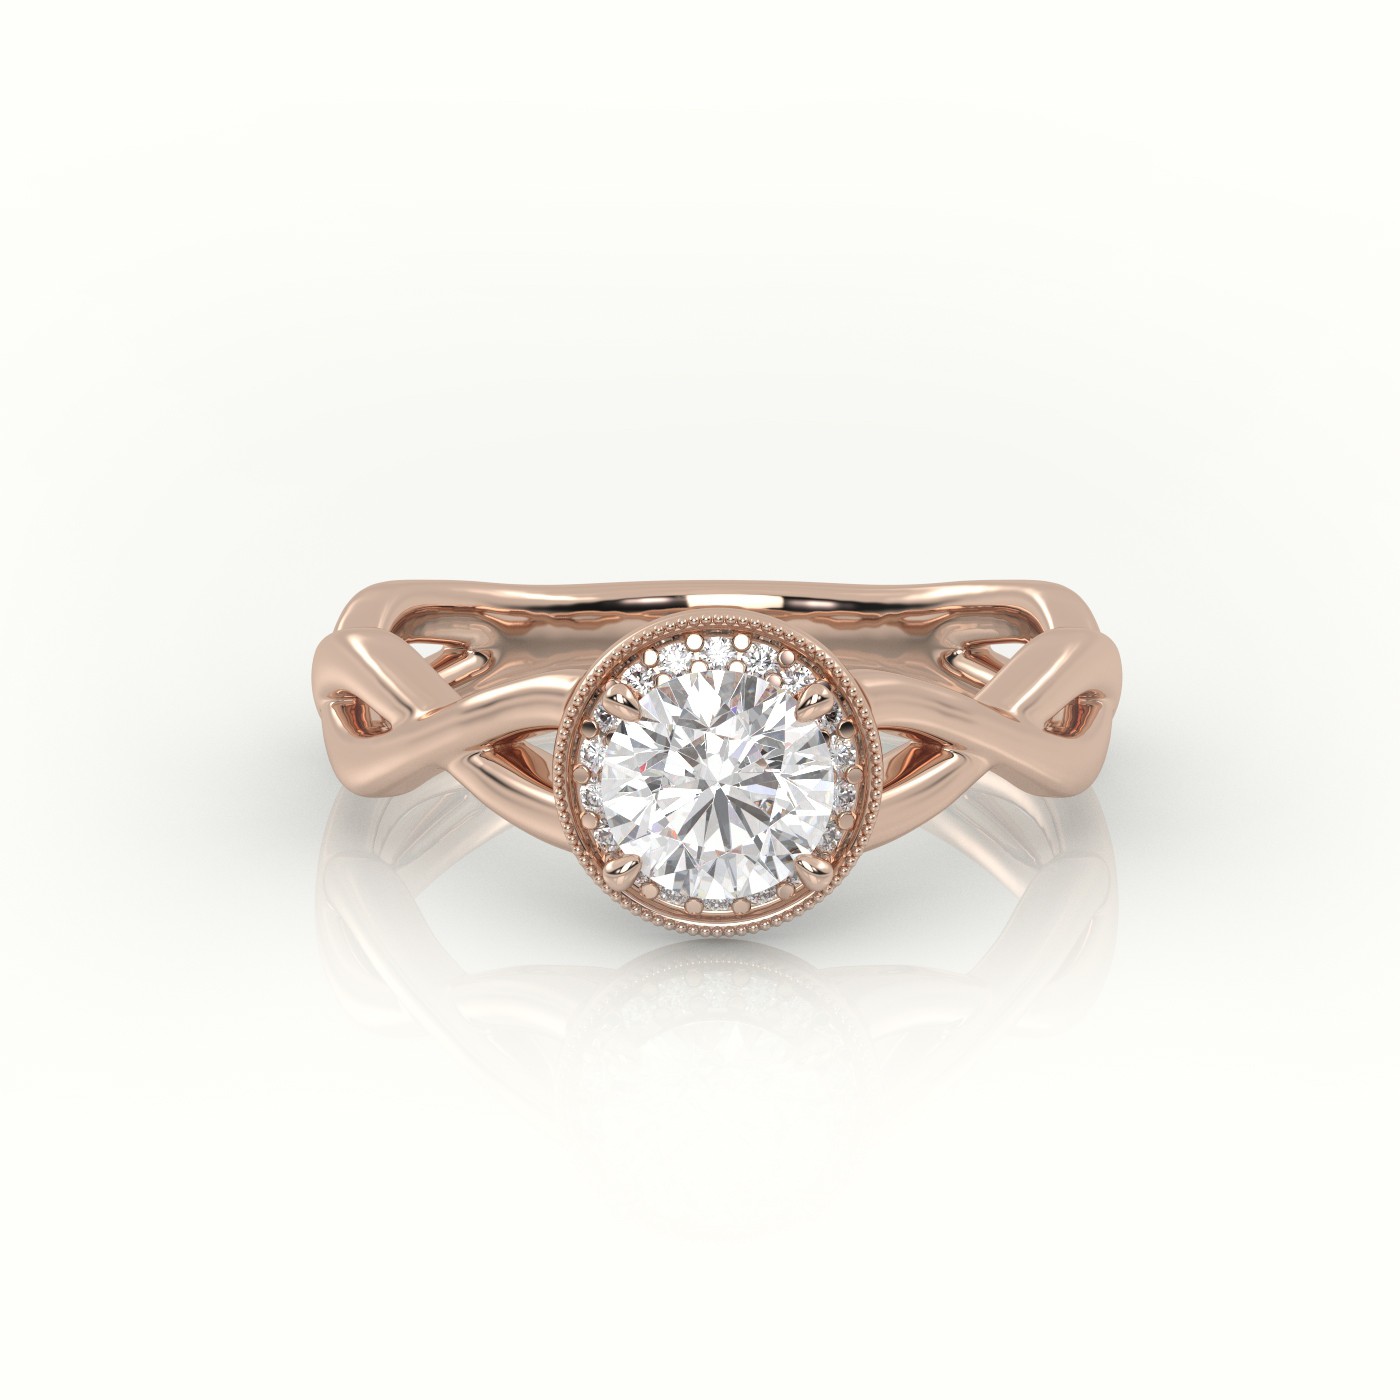 18K ROSE GOLD ROUND CUT DIAMOND 4 PRONGS INFINITY DESIGNER ENGAGEMENT RING